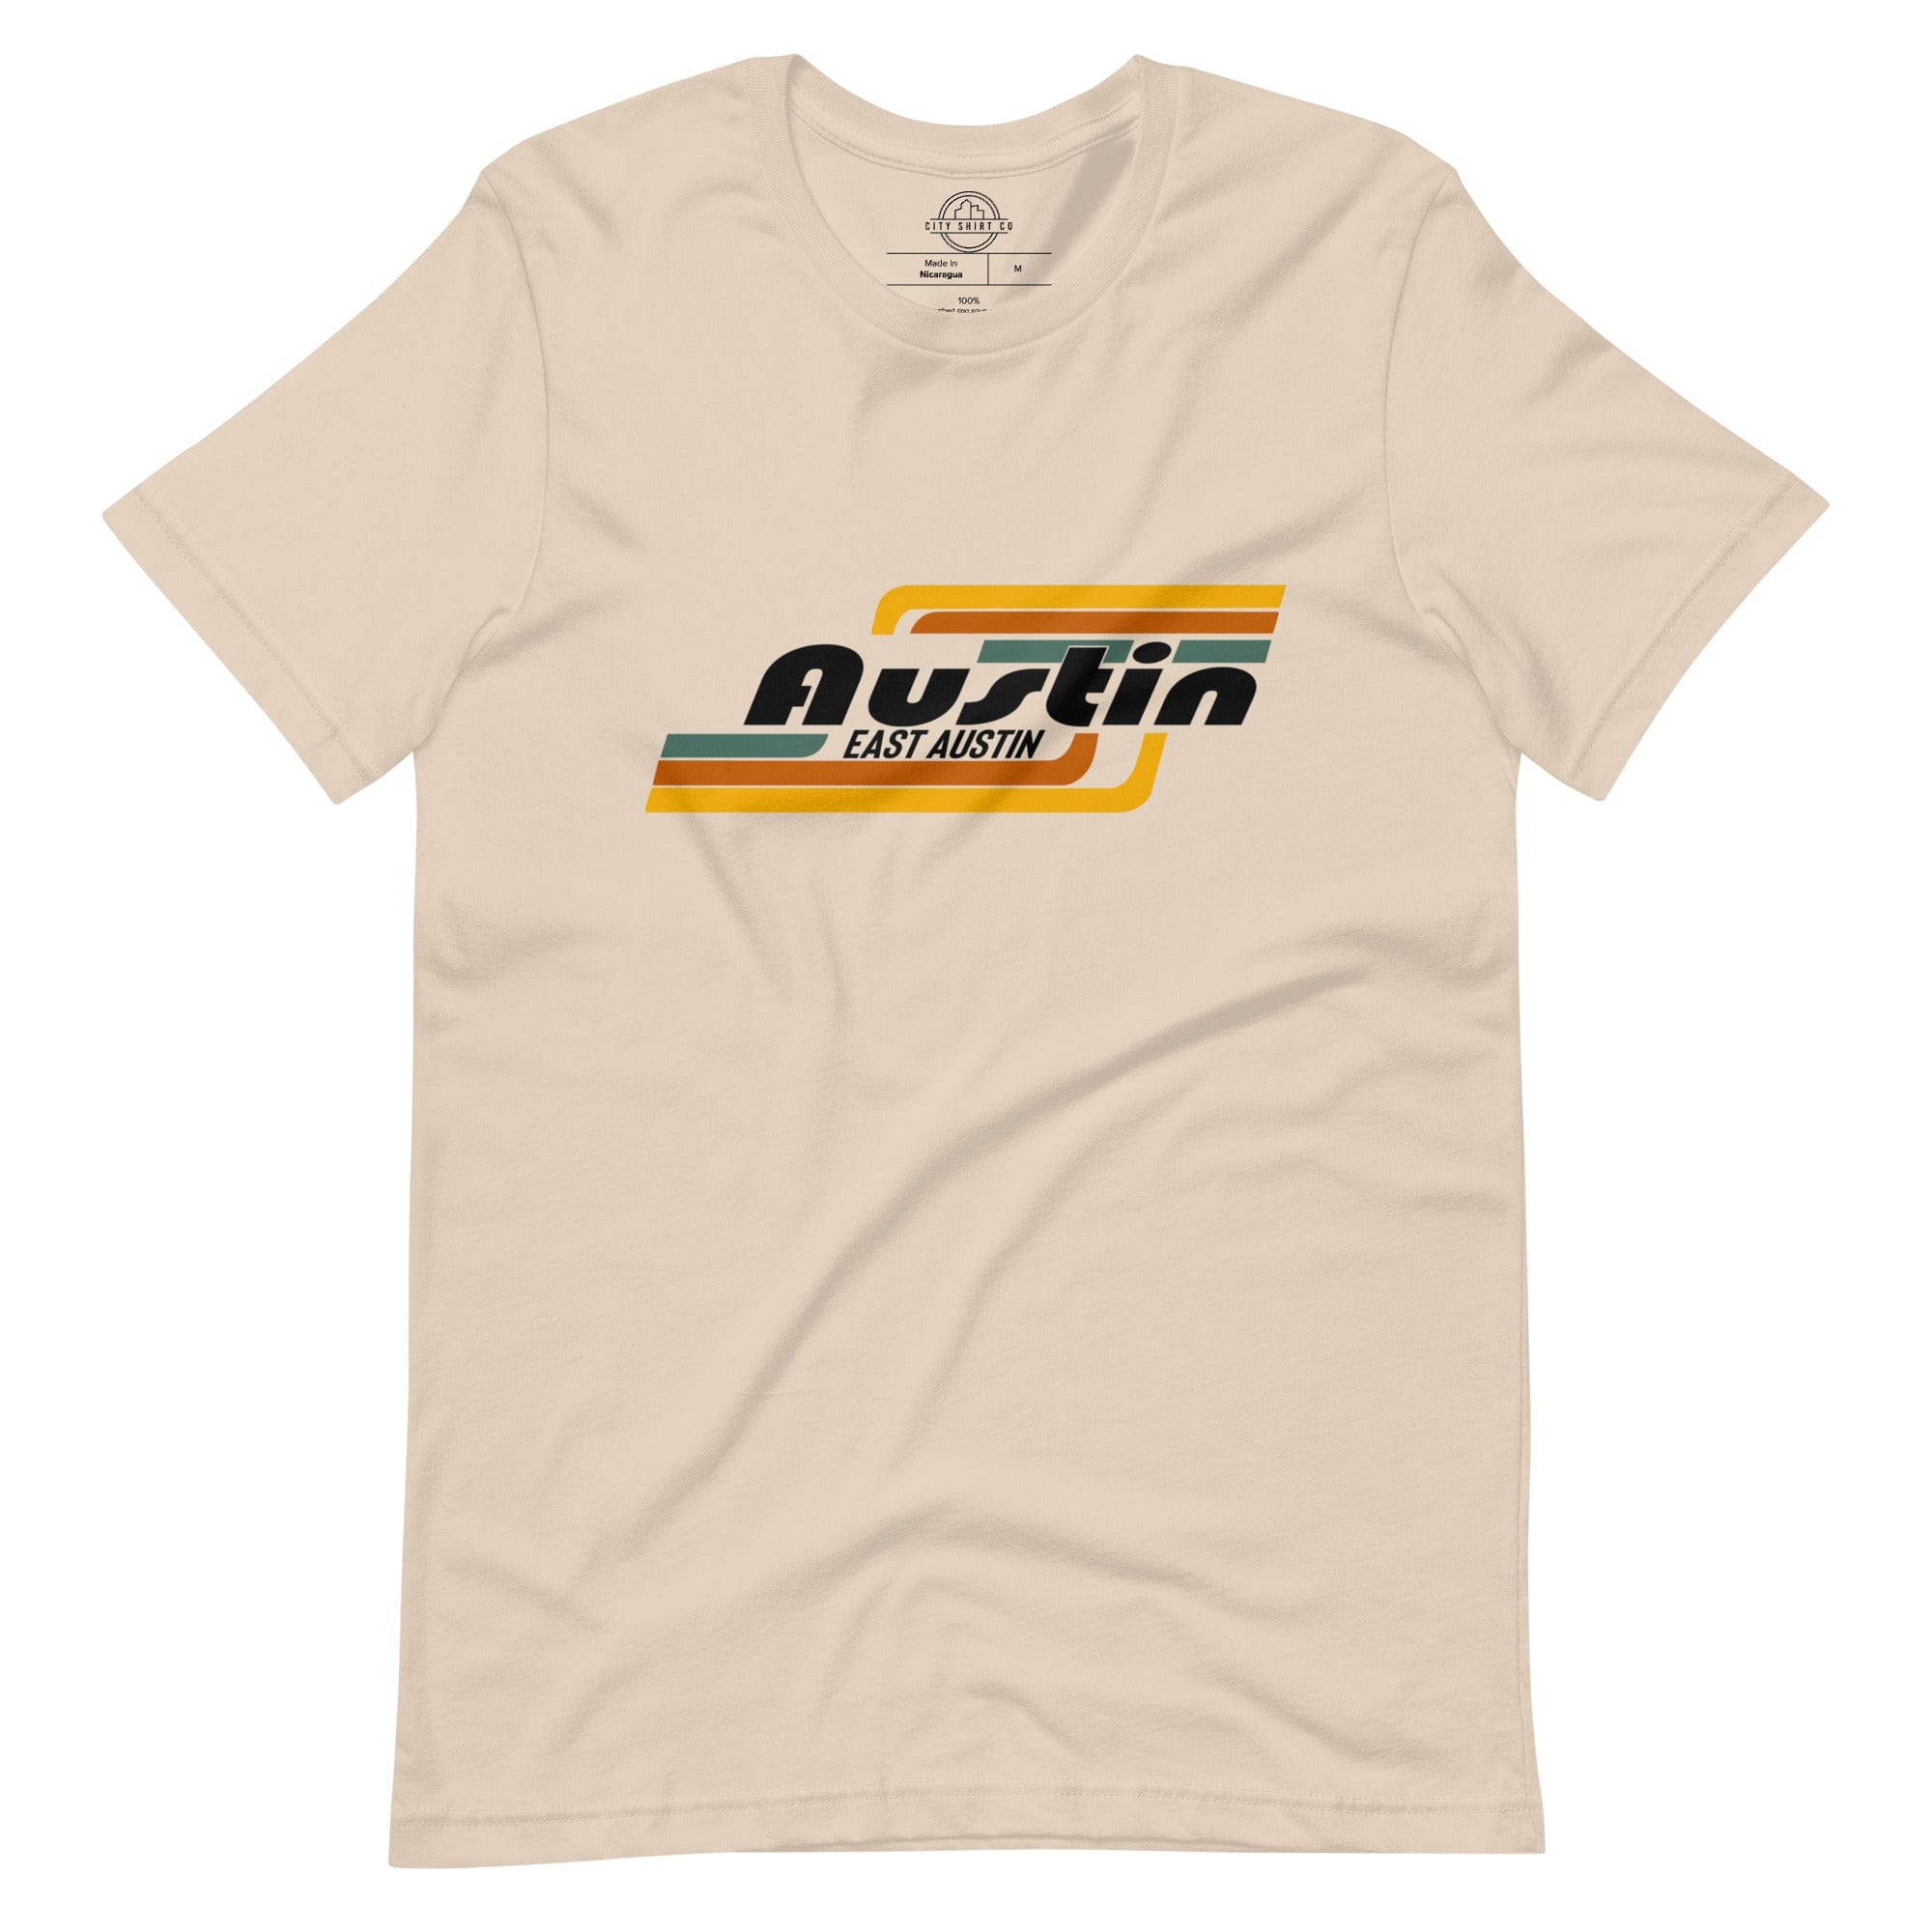 City Shirt Co Austin | East Austin Neighborhood T Shirt Soft Cream / XS